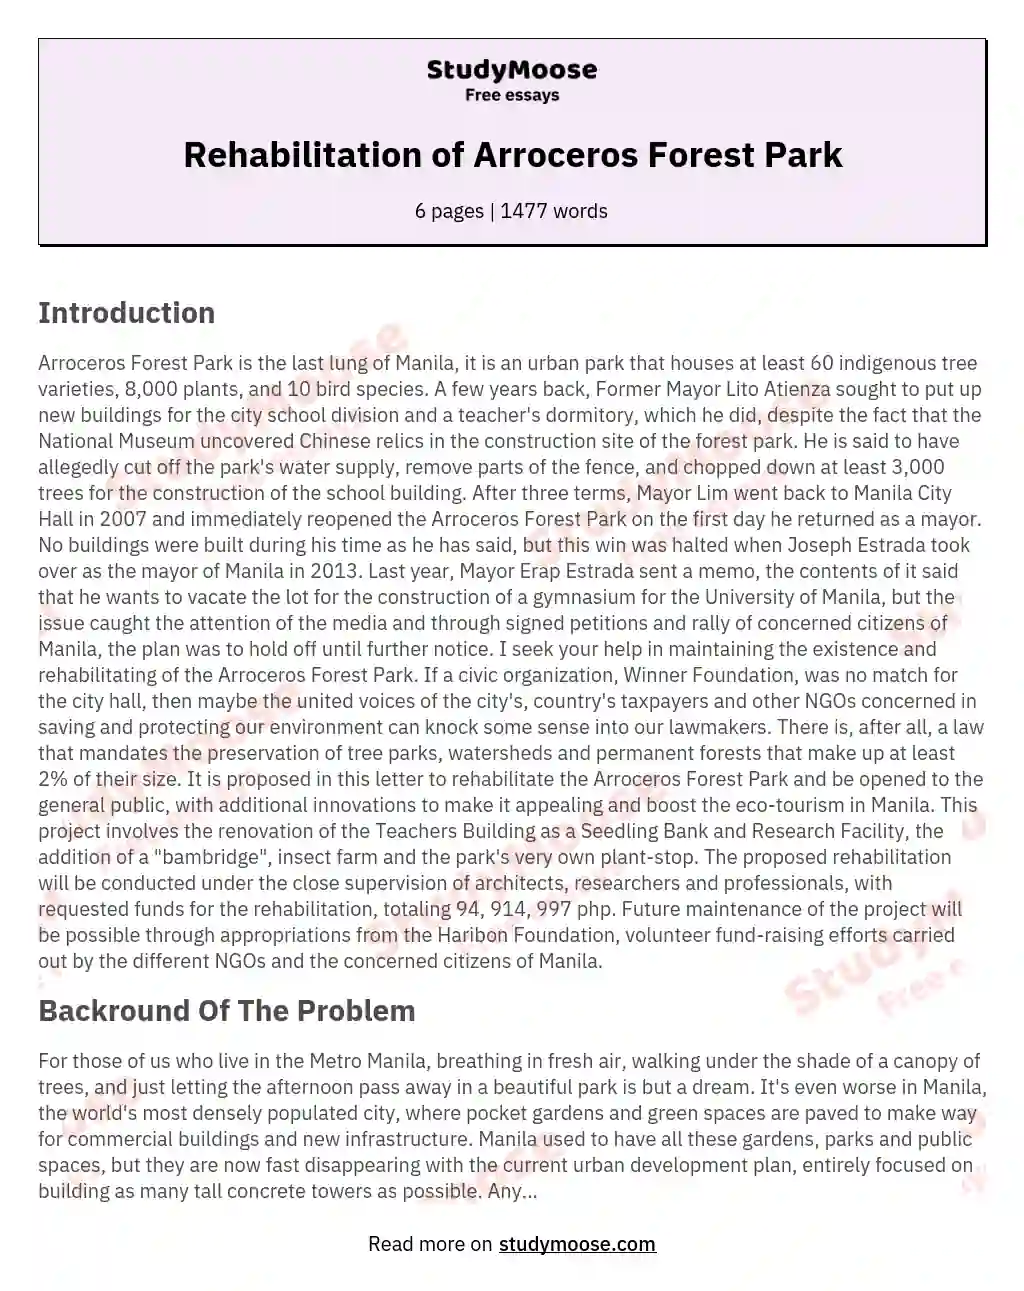 Rehabilitation of Arroceros Forest Park essay